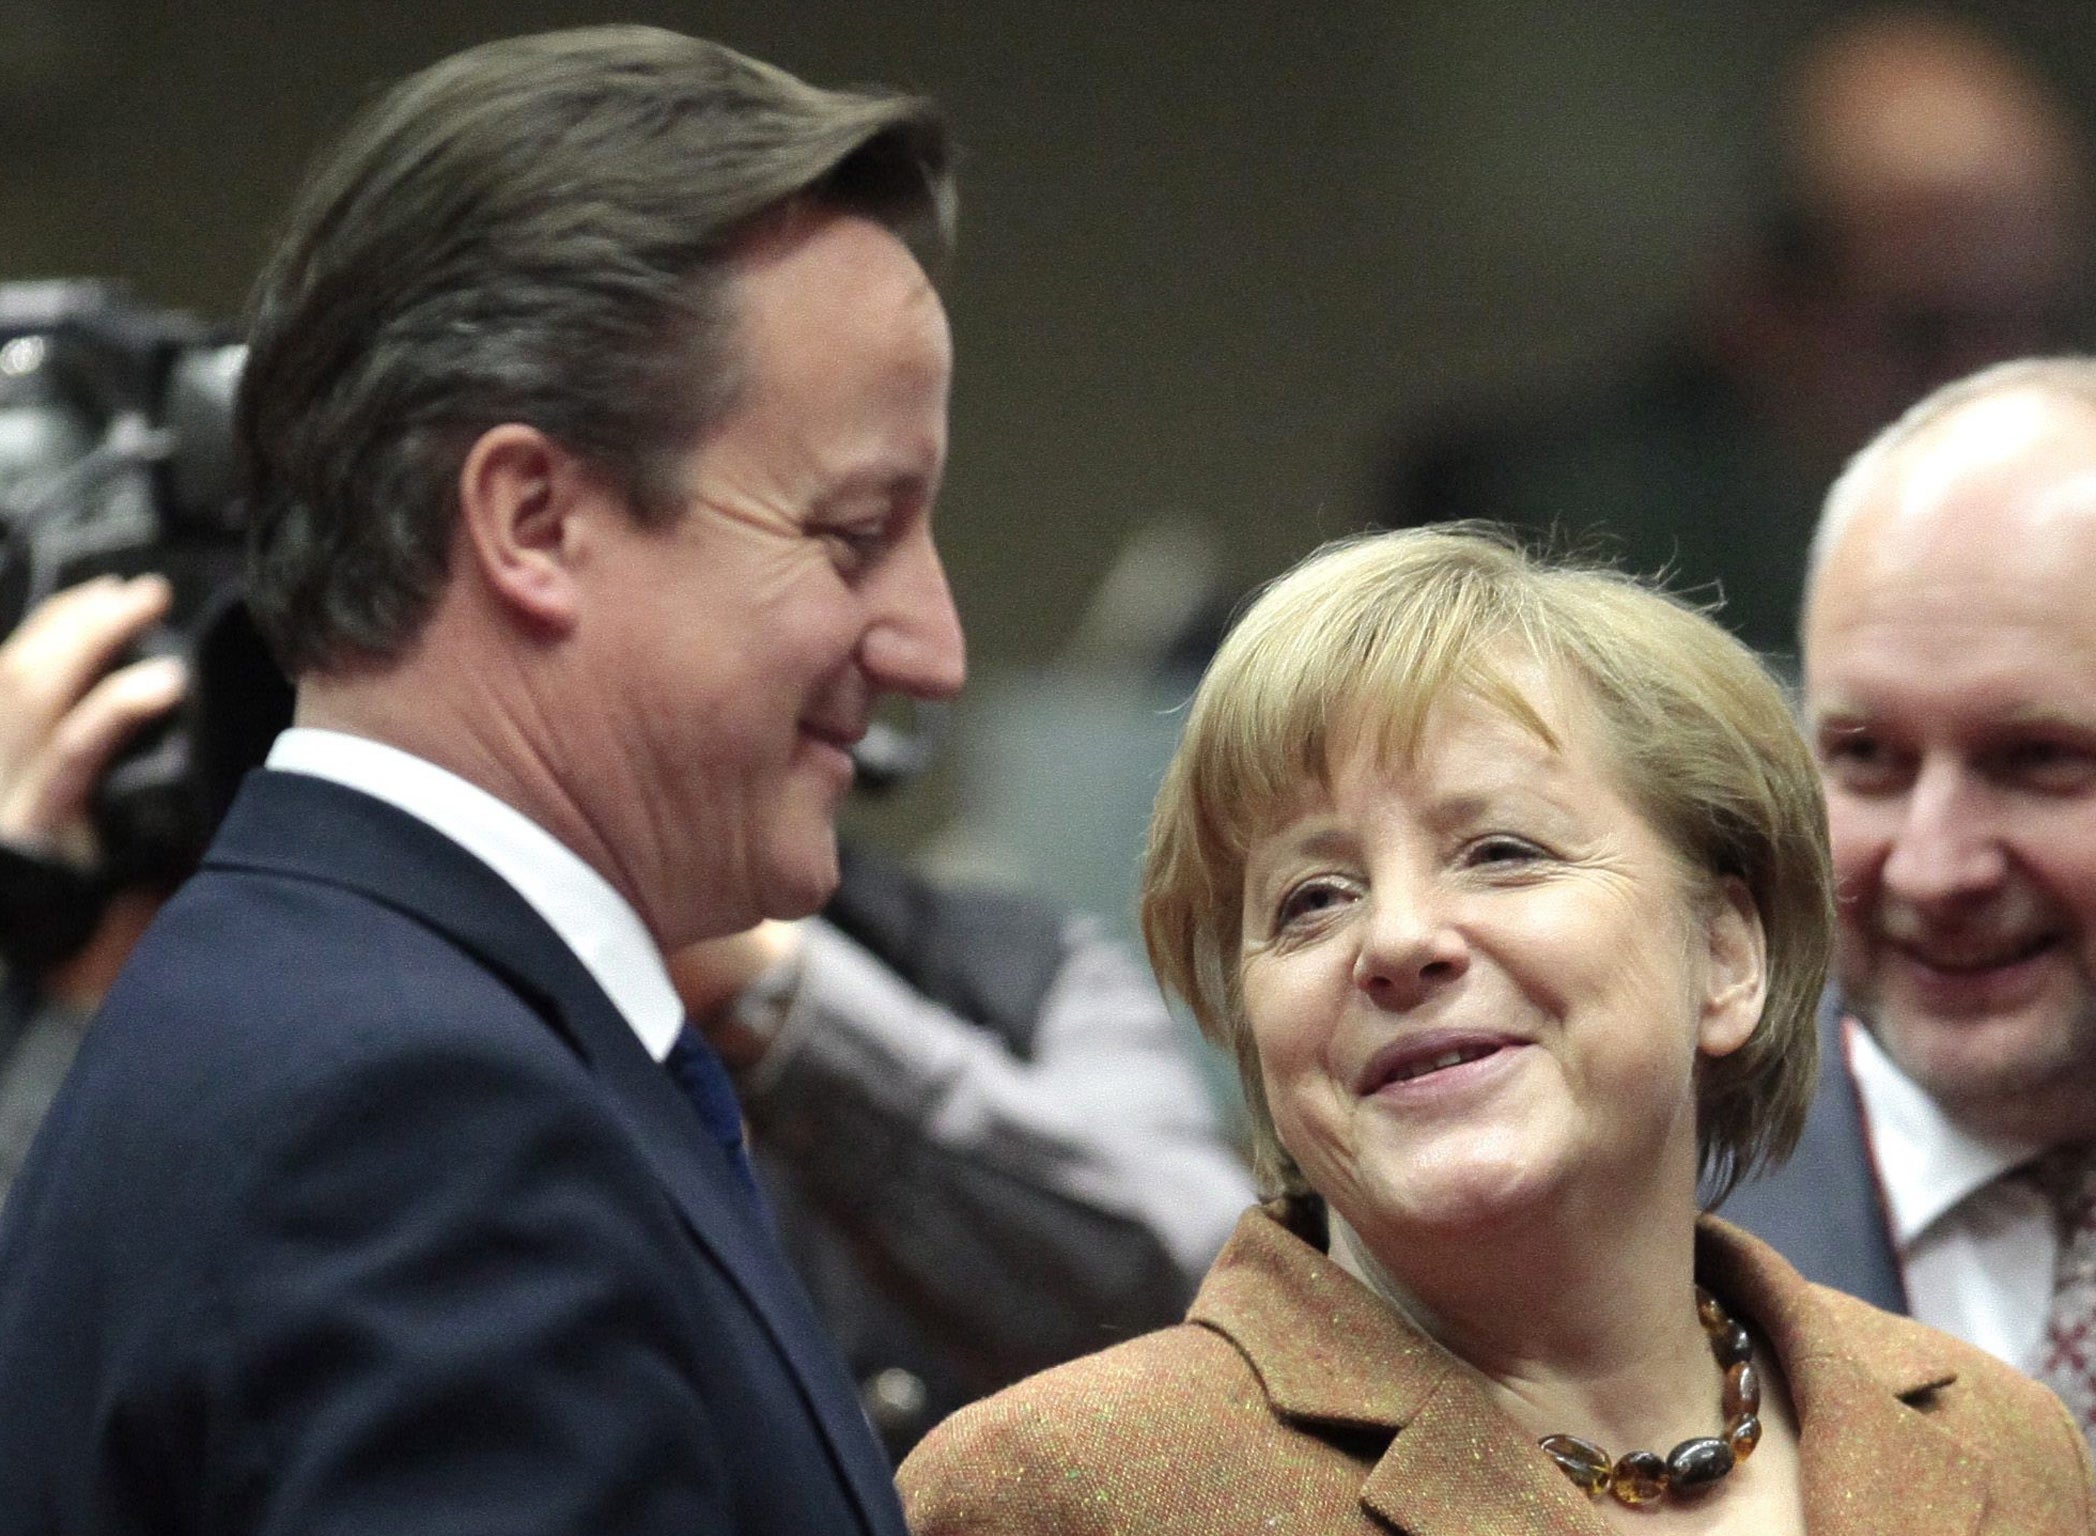 The eyes have it: David Cameron and Angela Merkel at the EU summit in Brussels last week